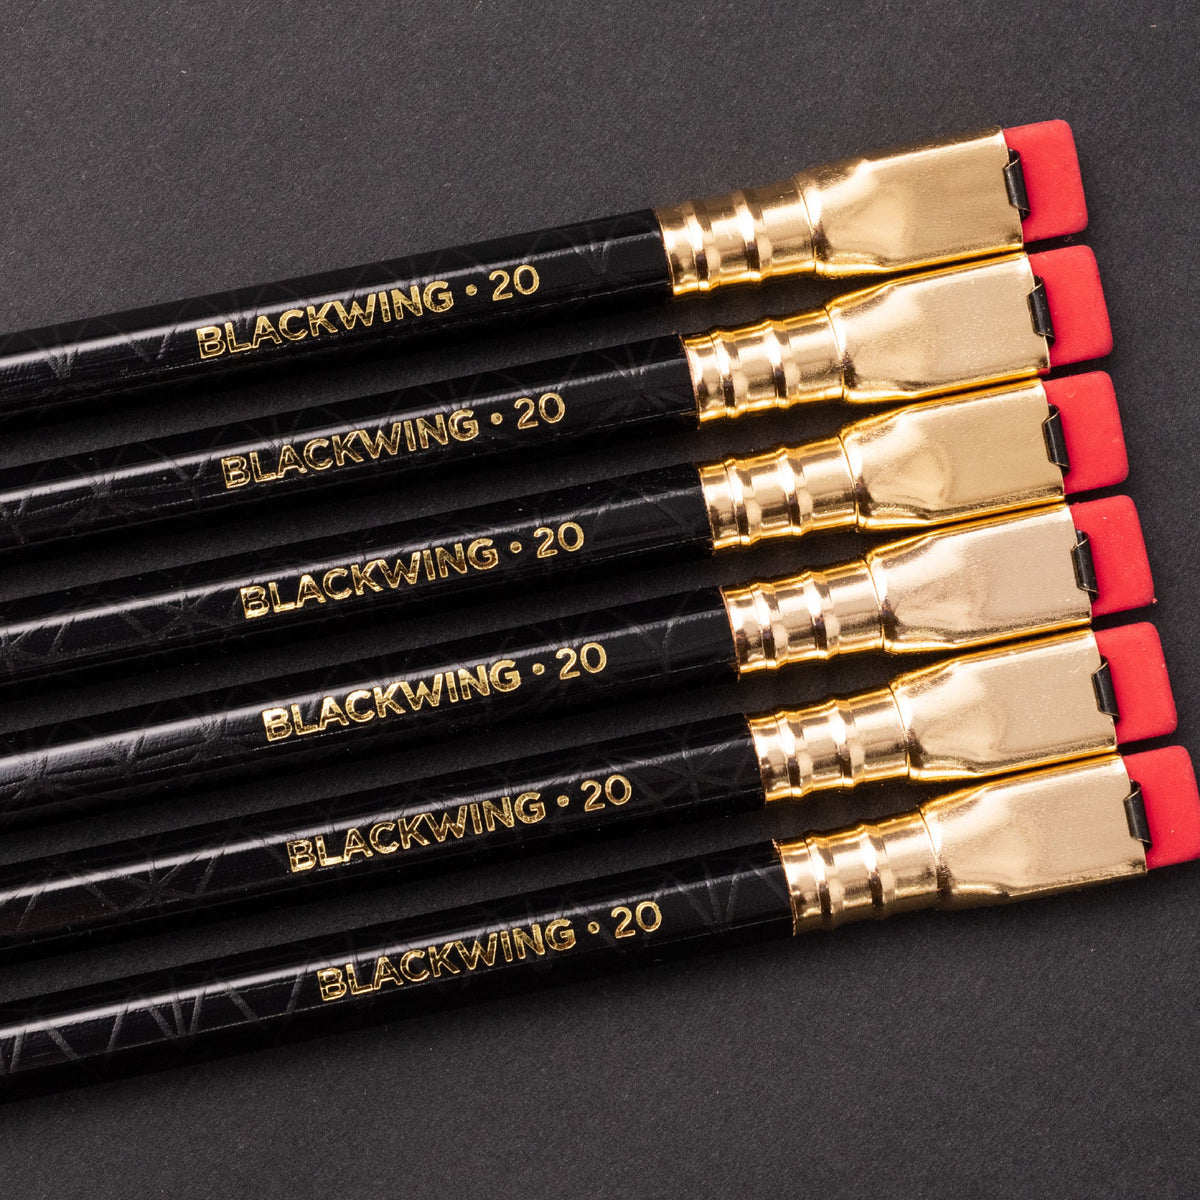 Blackwing - Pencil - Volume 20 - Box of 12